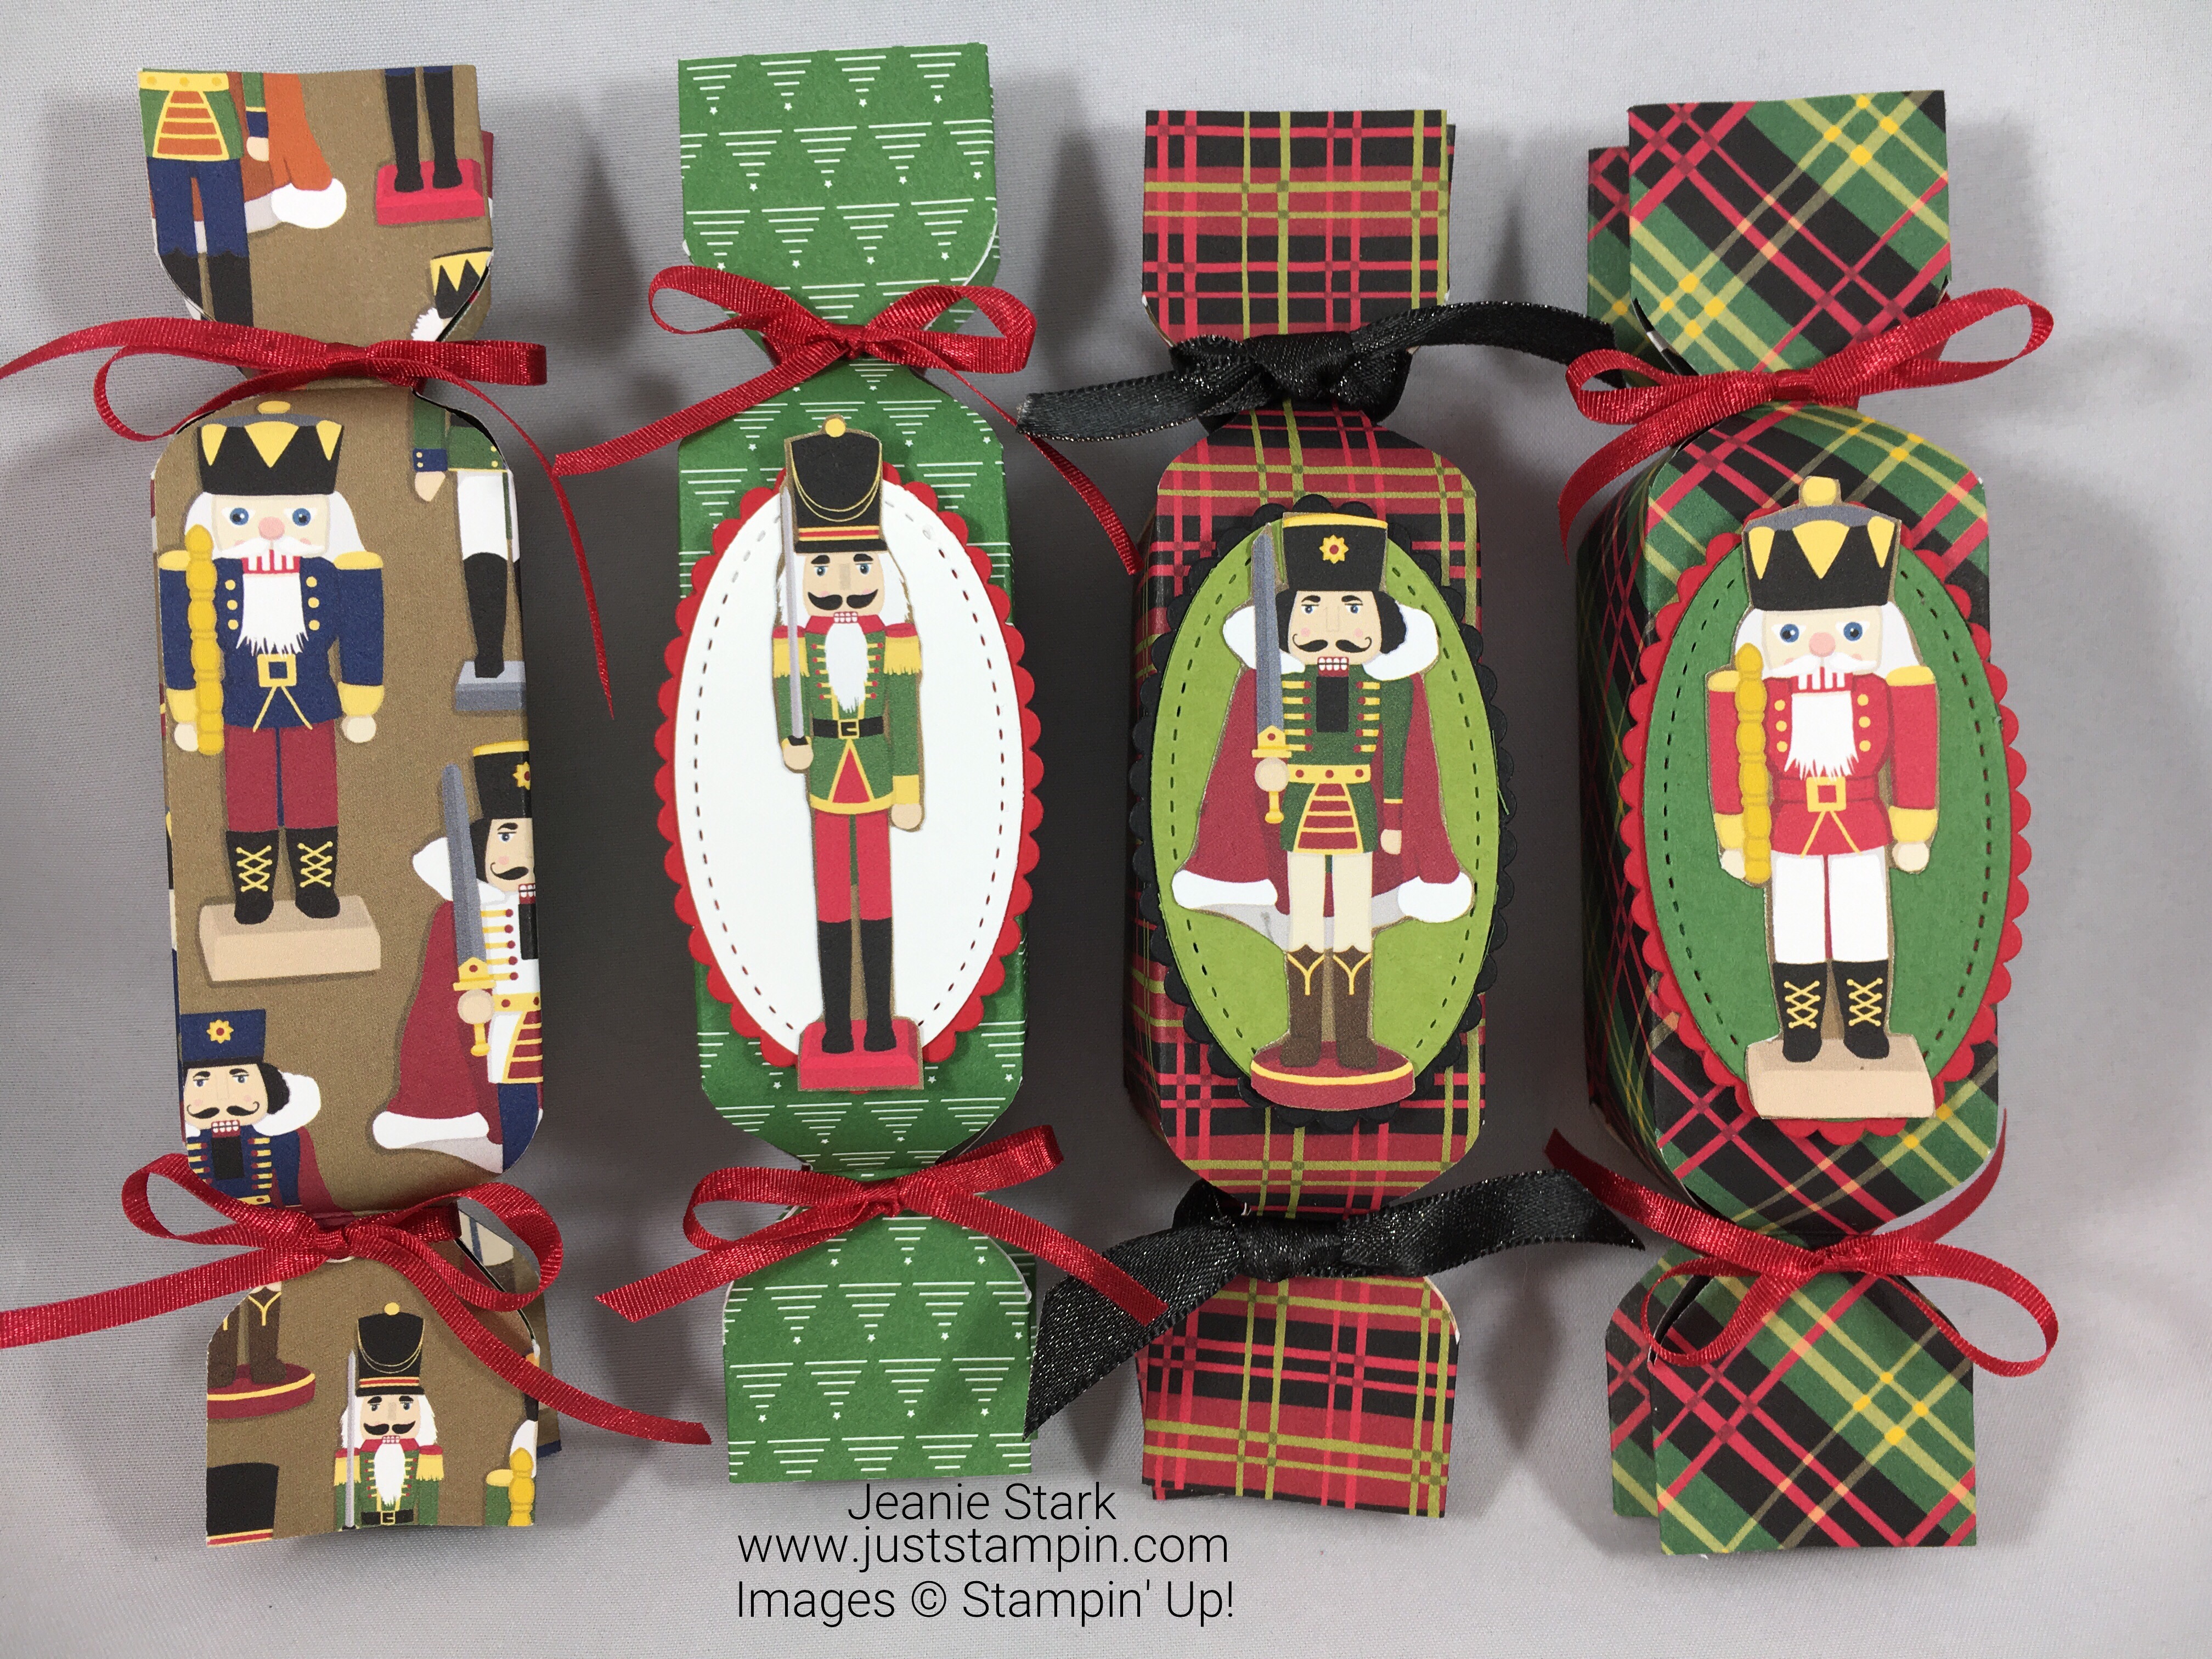 Stampin Up Christmas Around the World nutcracker treat holder idea - Jeanie Stark StampinUp